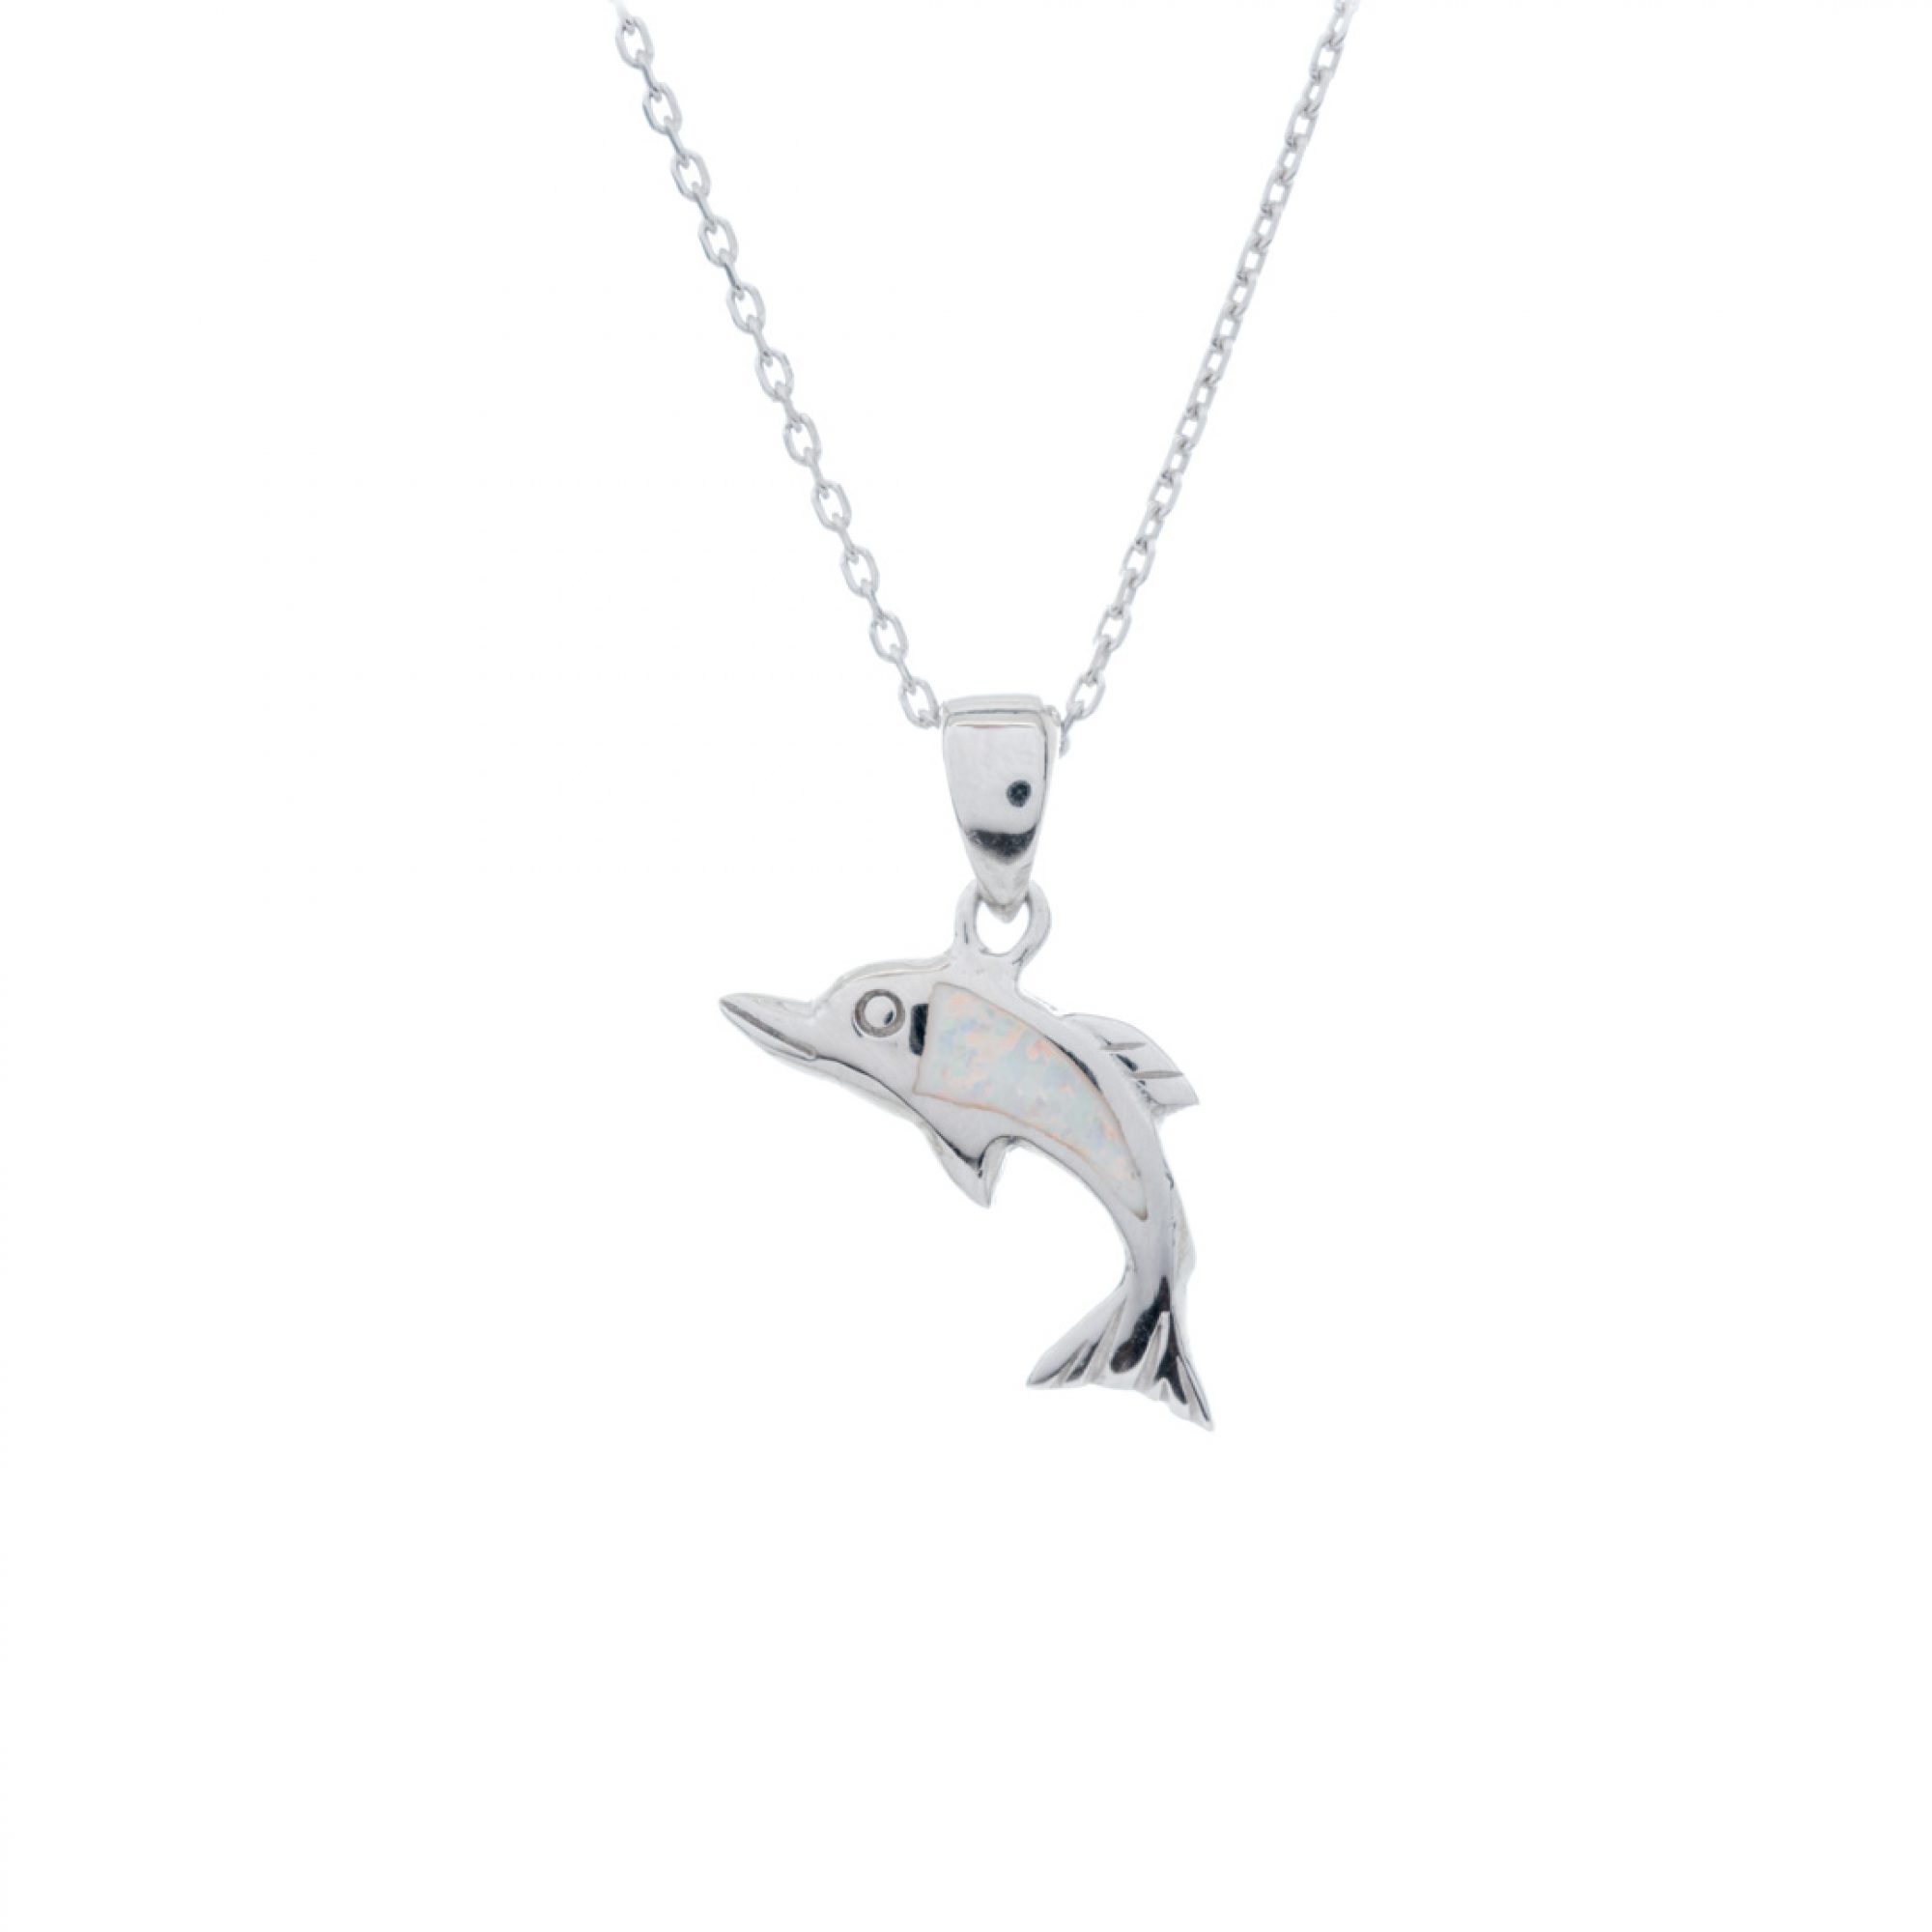 White opal dolphin pendant